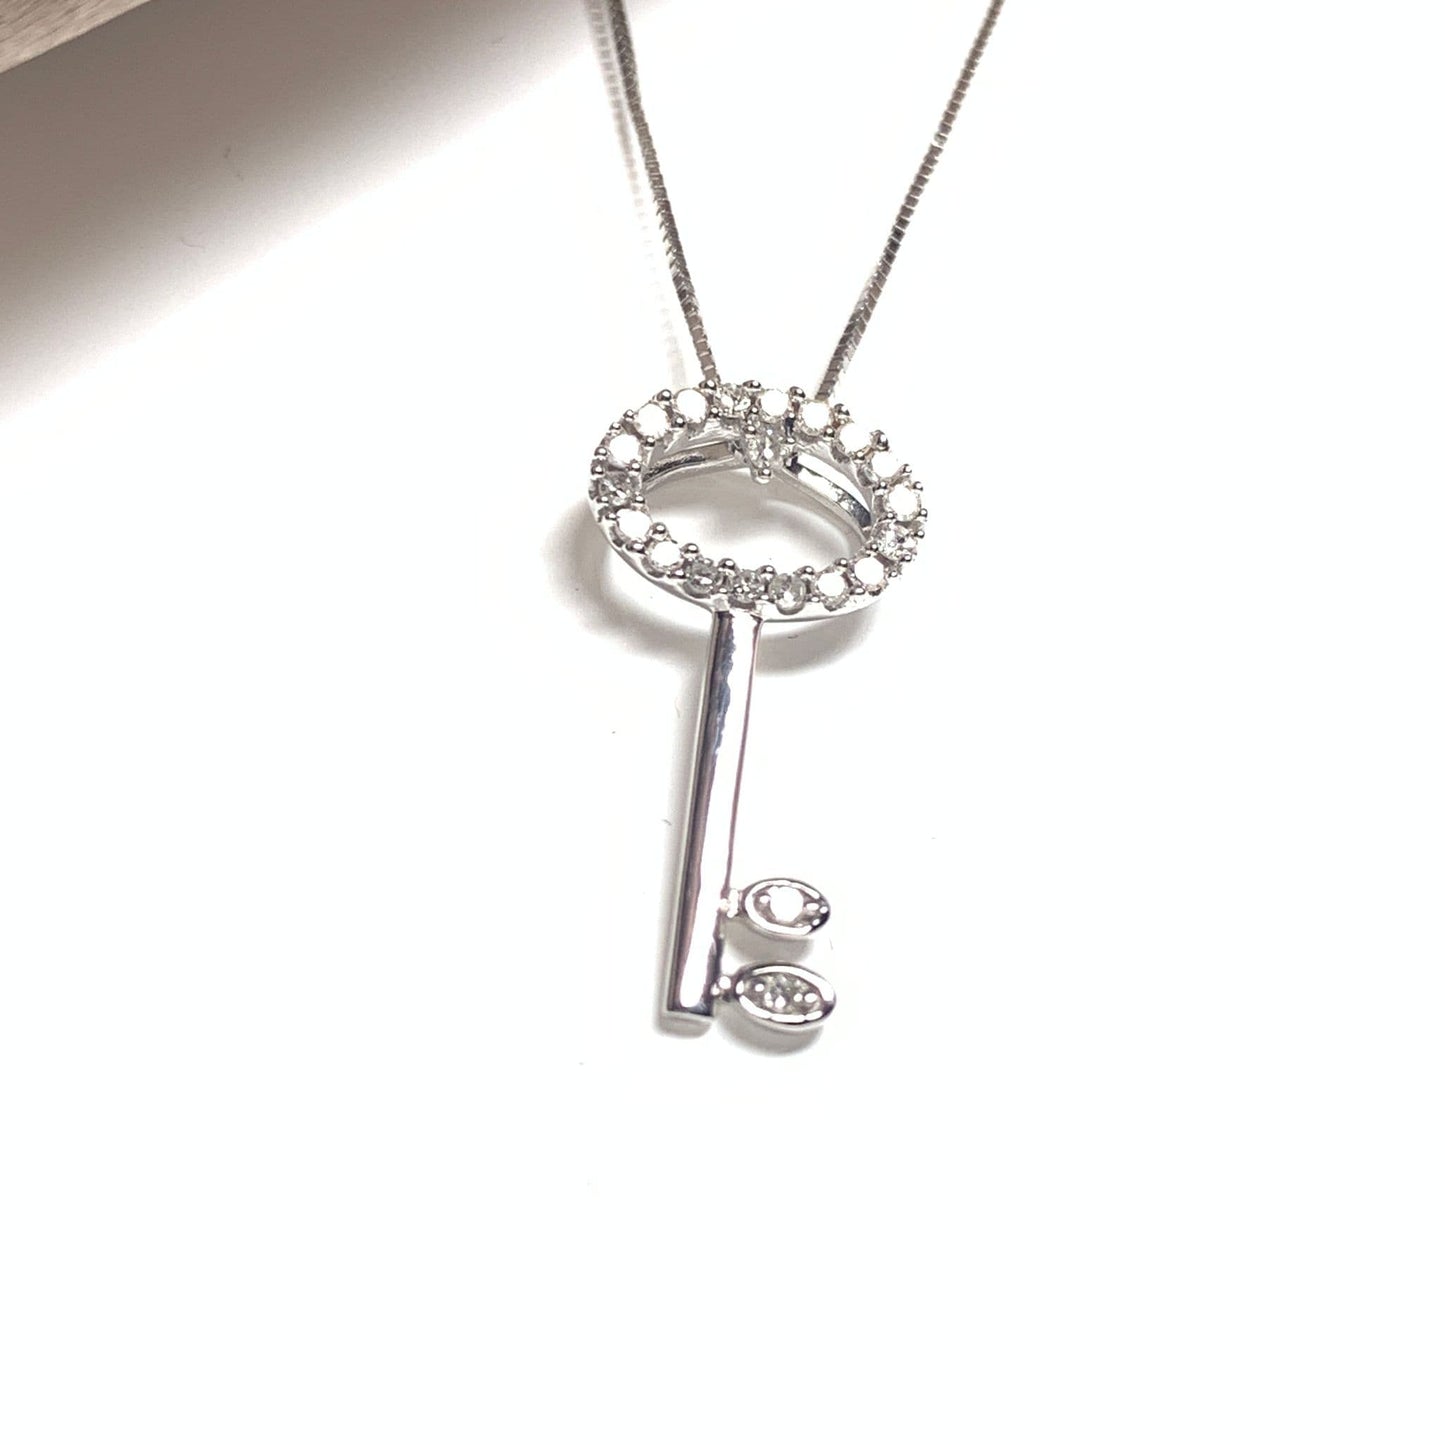 Key shaped diamond necklace pendant